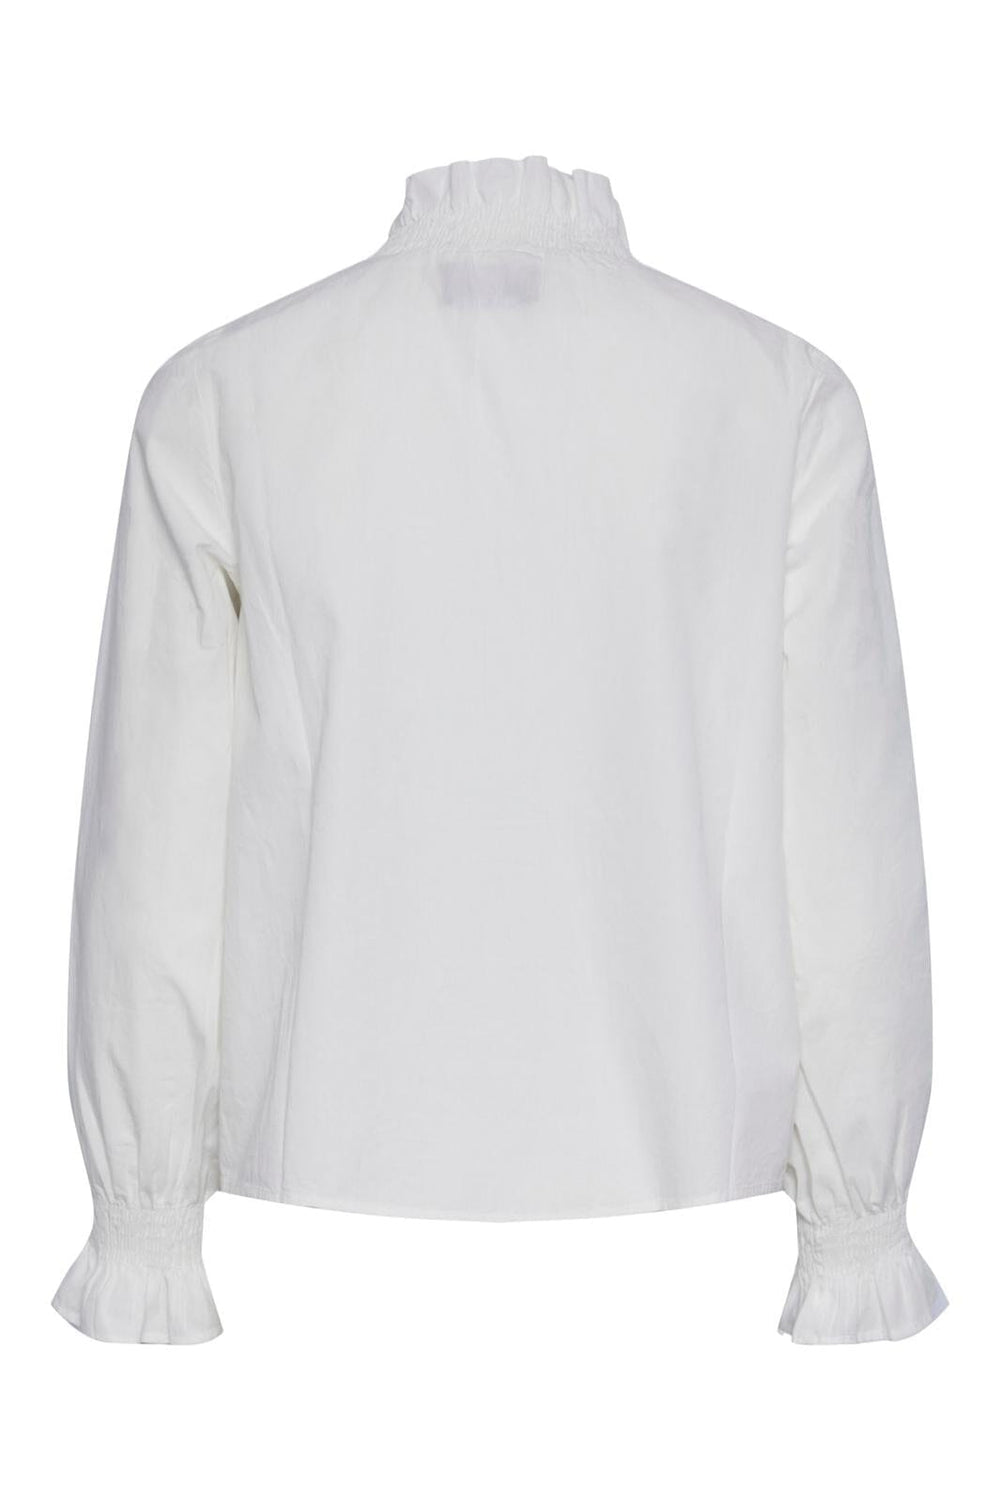 Pieces, Pcsunny Ls Shirt, Bright White